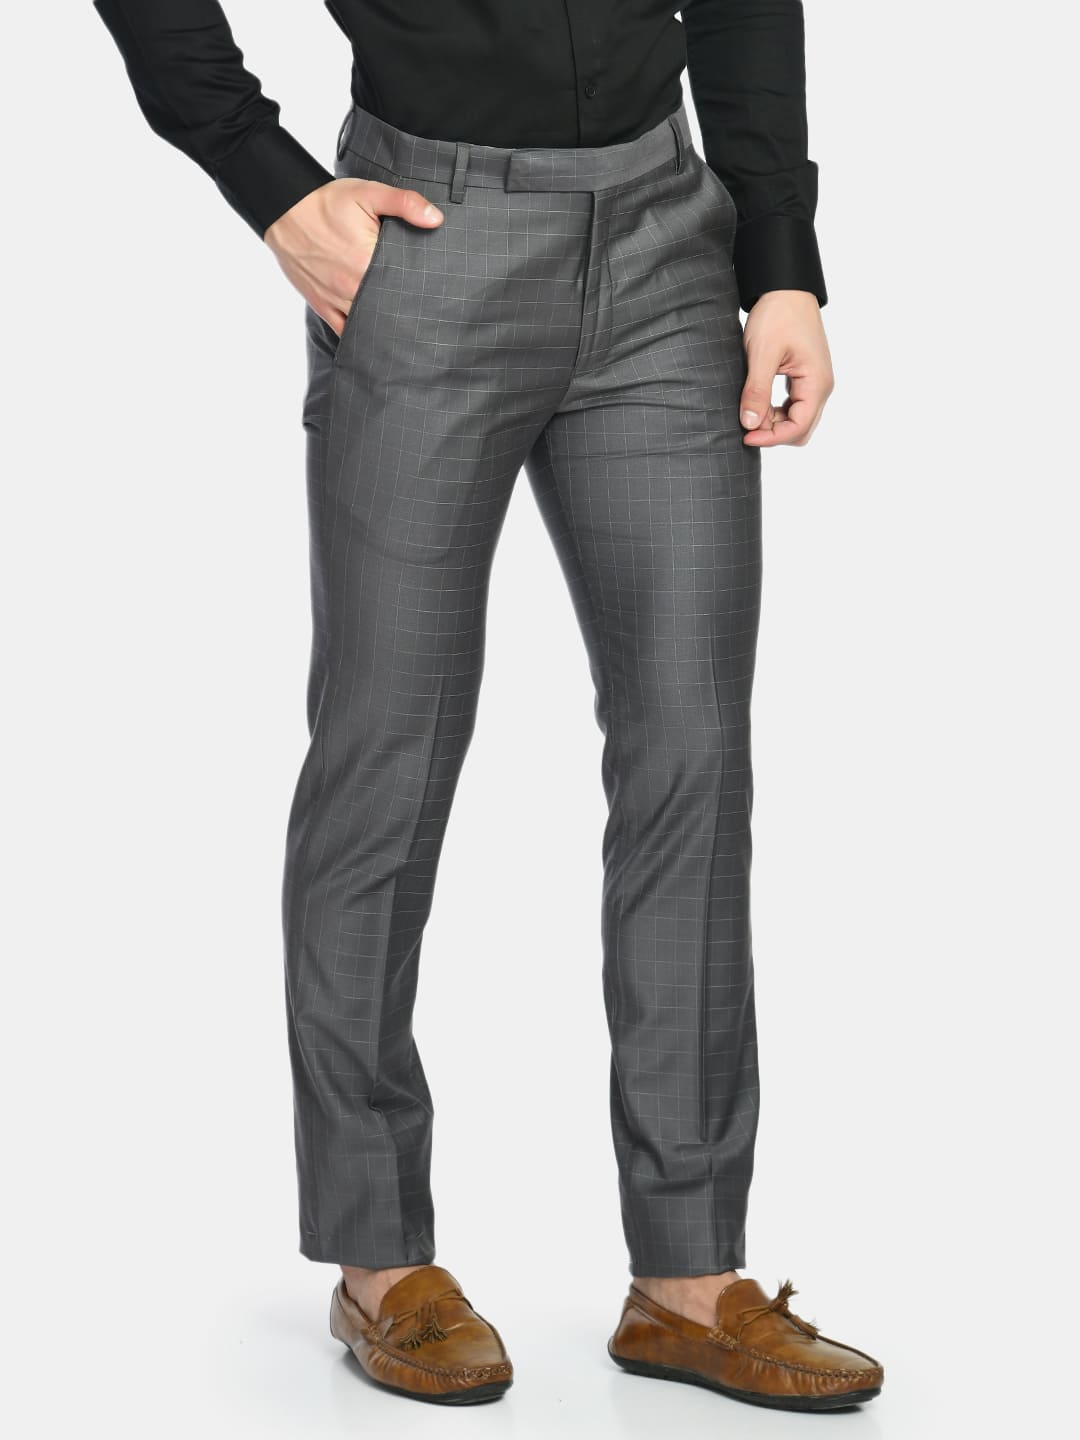 MANCREW Formal Pants for men - Formal Trousers Combo - Navy Blue, Light Grey